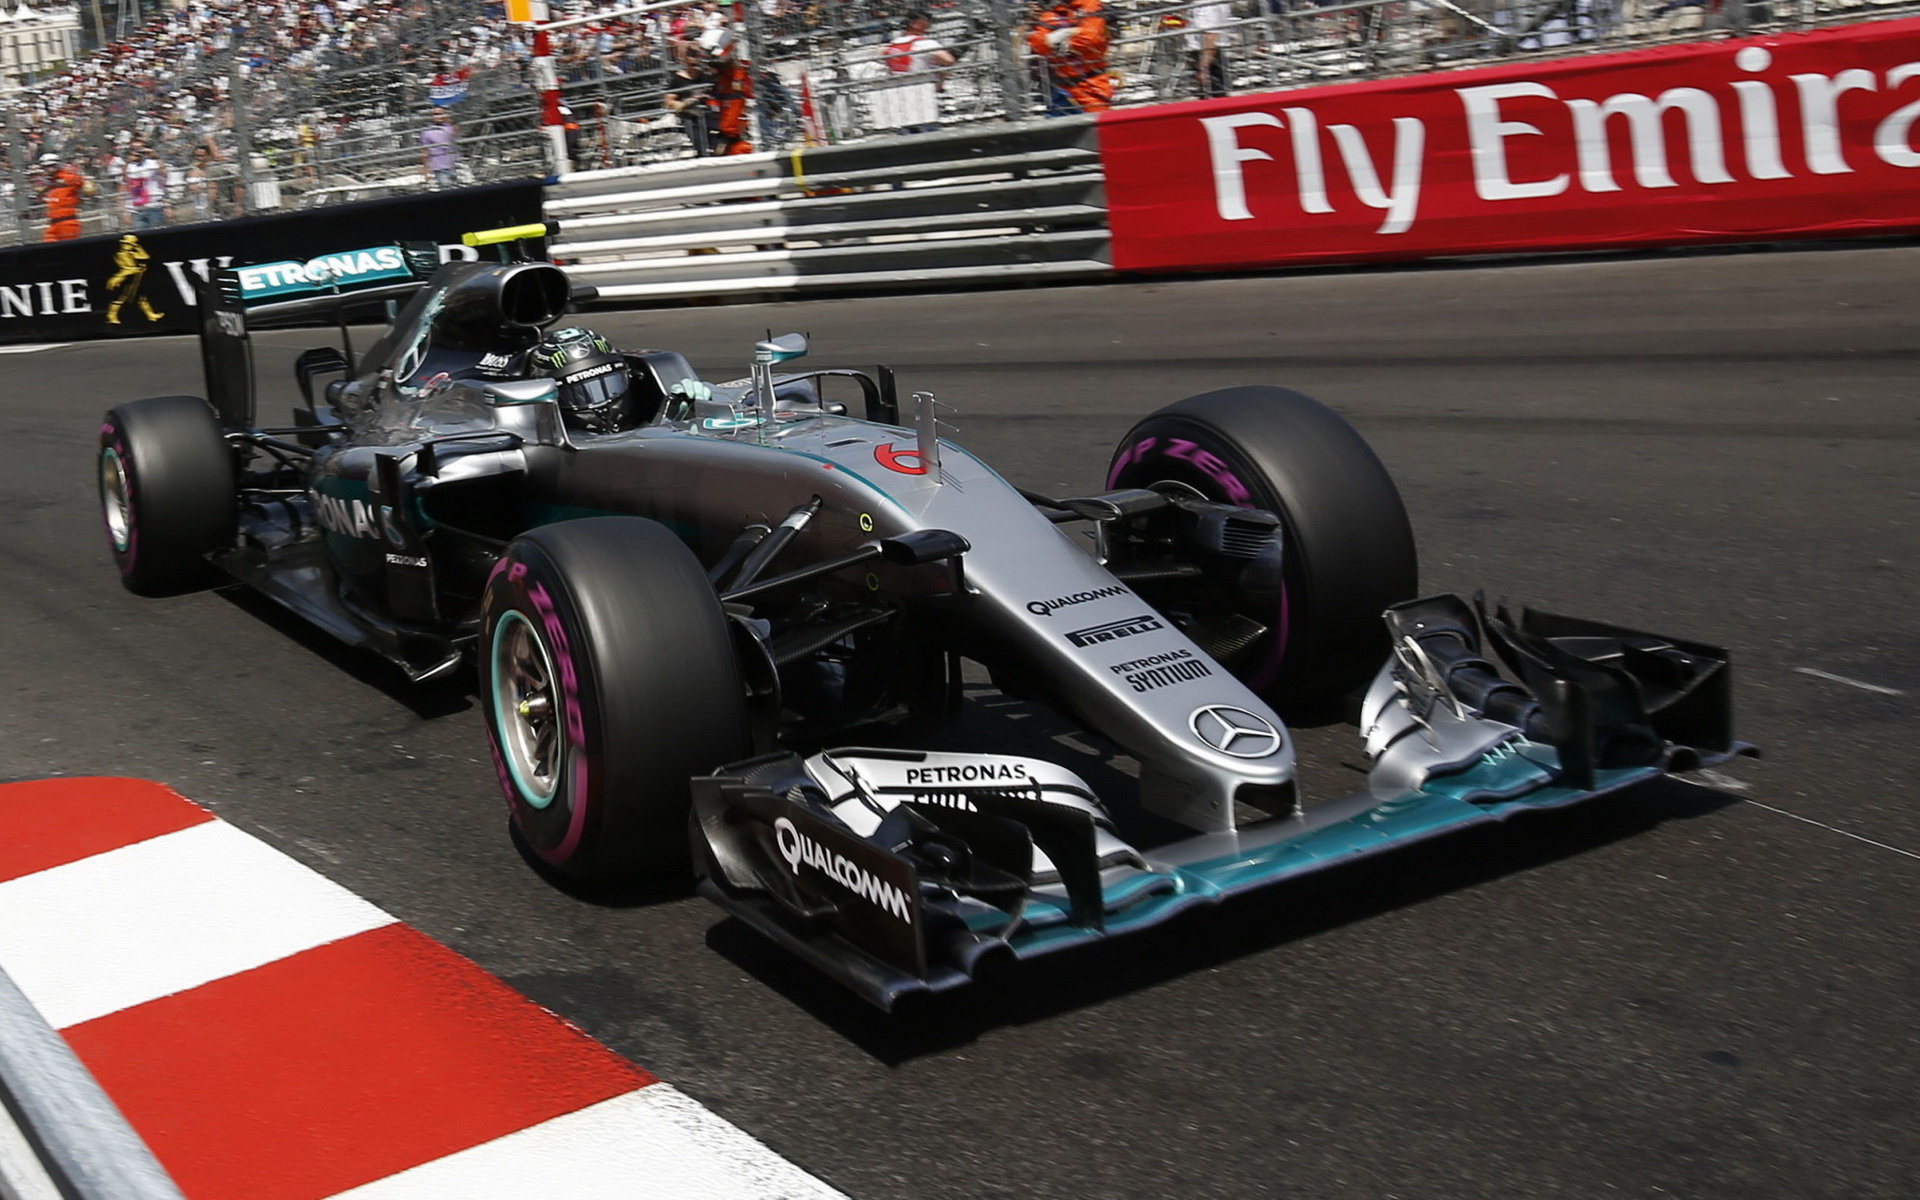 Nico Rosberg při kvalifikaci v Monaku